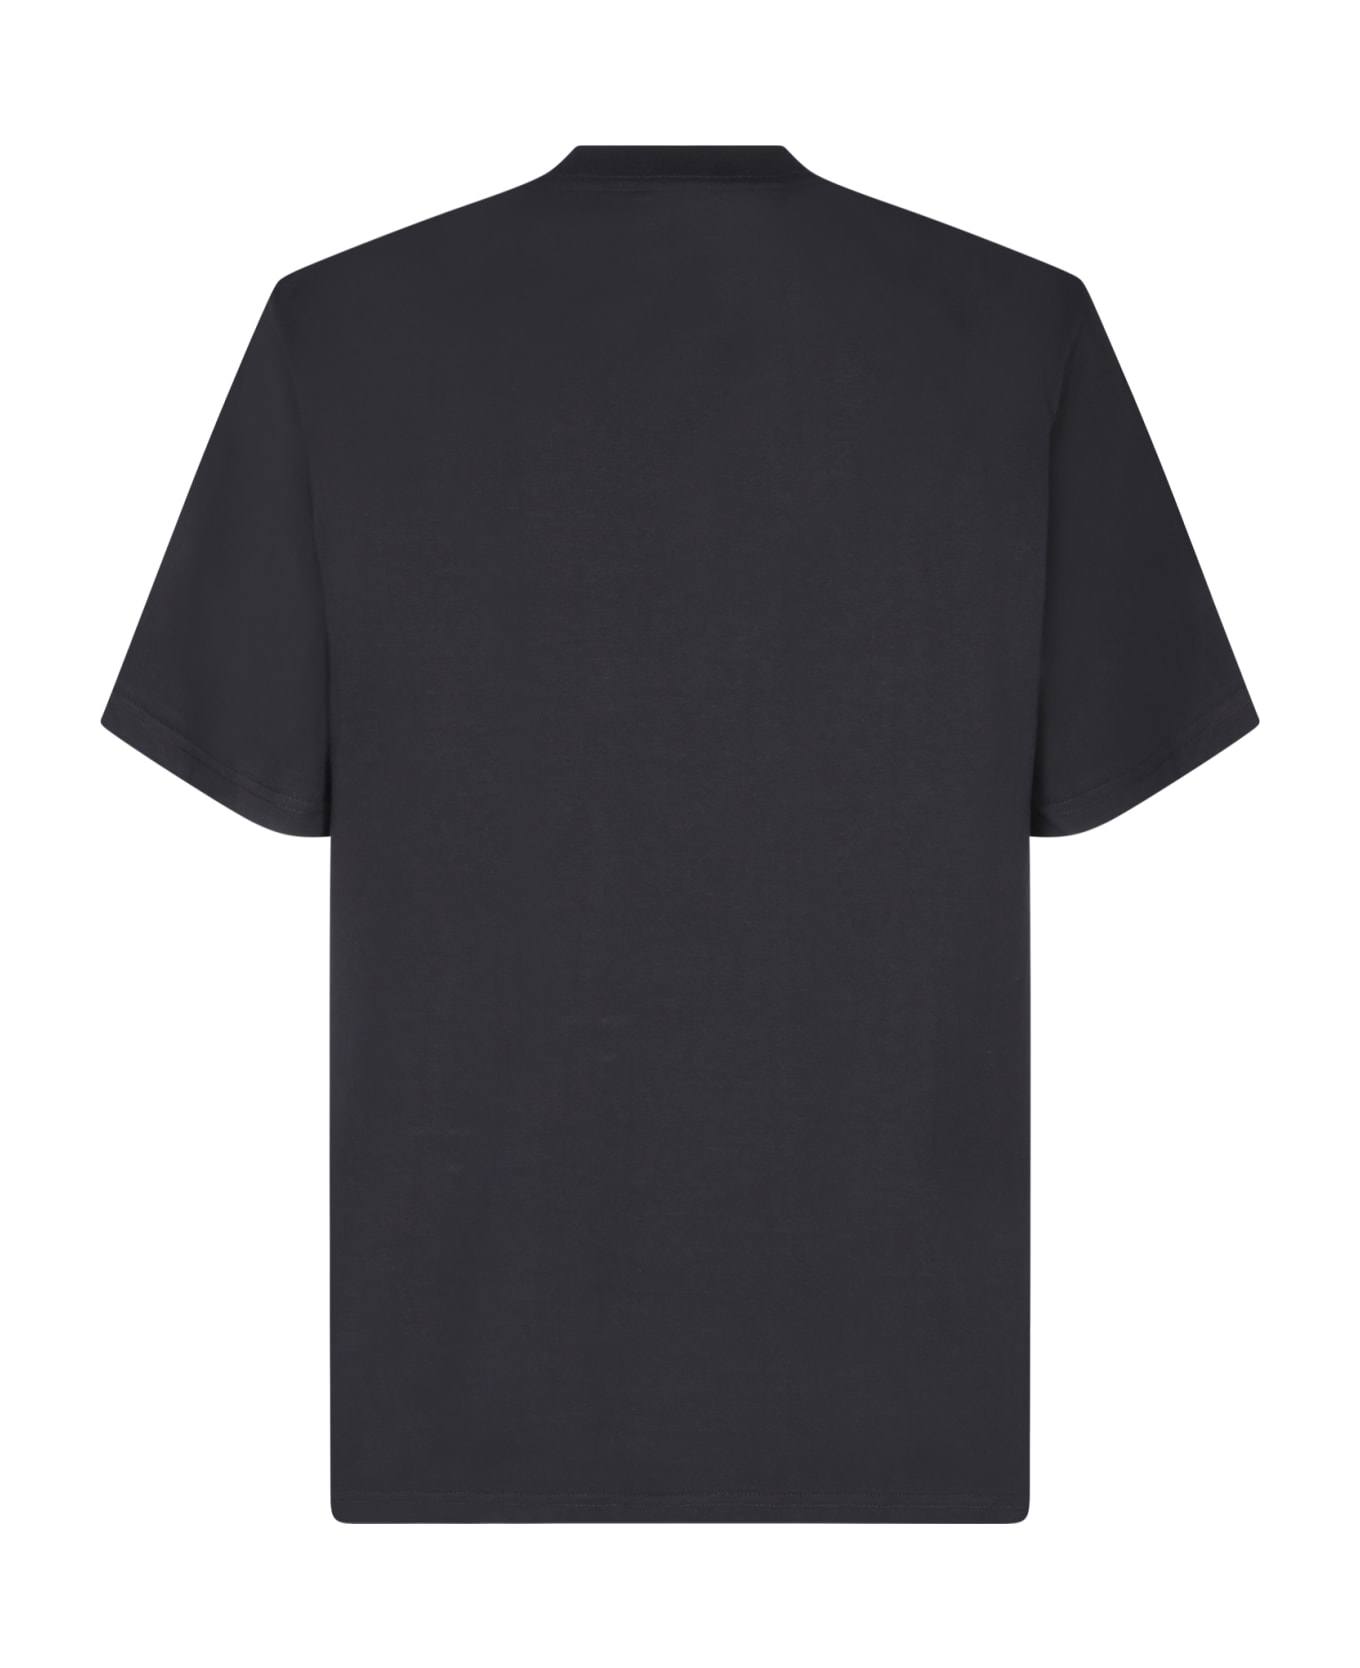 Martine Rose Logo Cotton T-shirt Black - Black